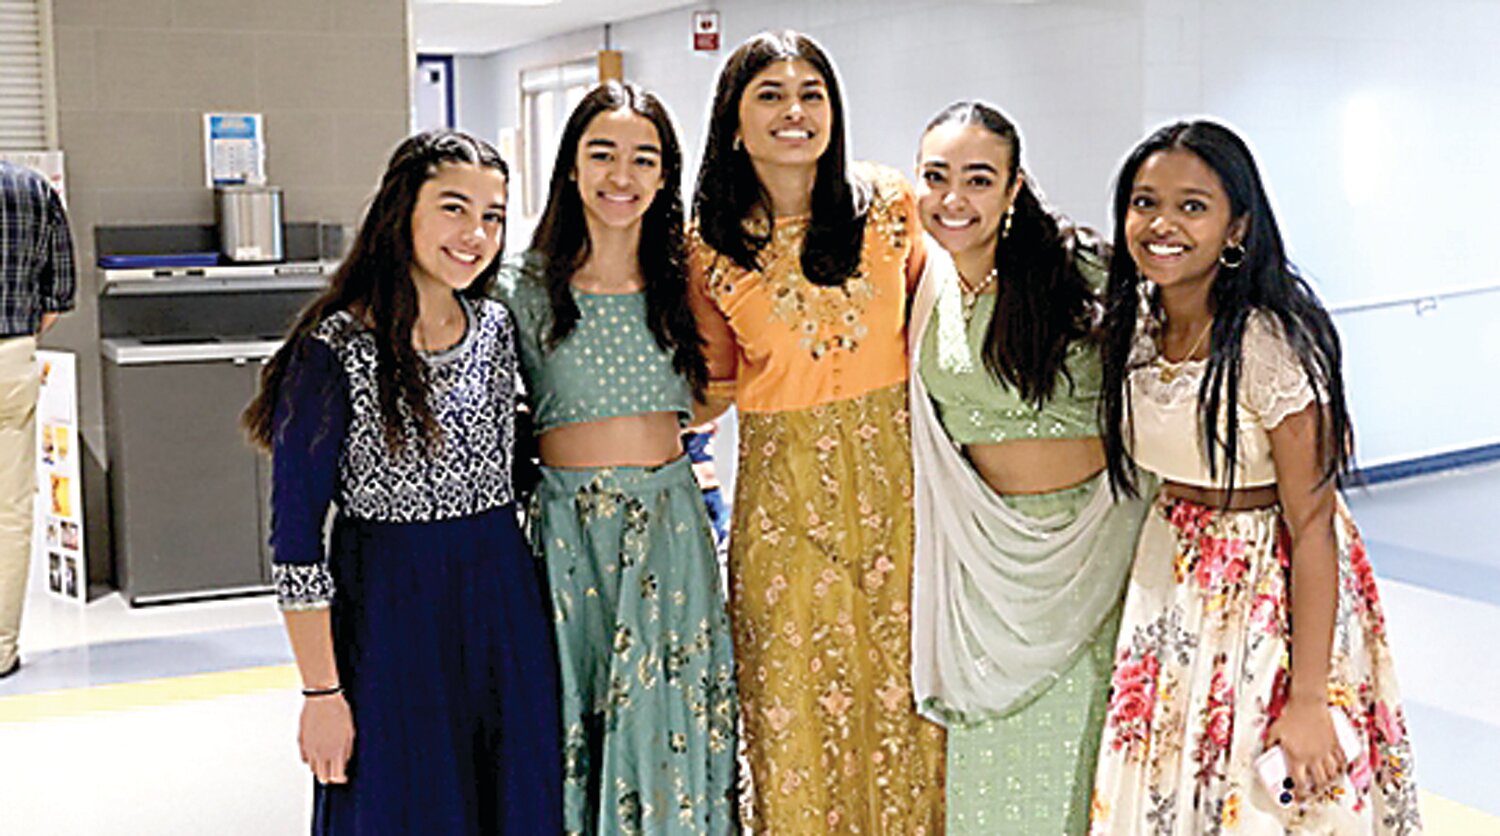 Students Maya Patel, Ava Bond, Arya Heble, Vienna Ajmeri and Jothika Amuth wear traditional Indian clothing, including salwars, lehengas and kurtis.